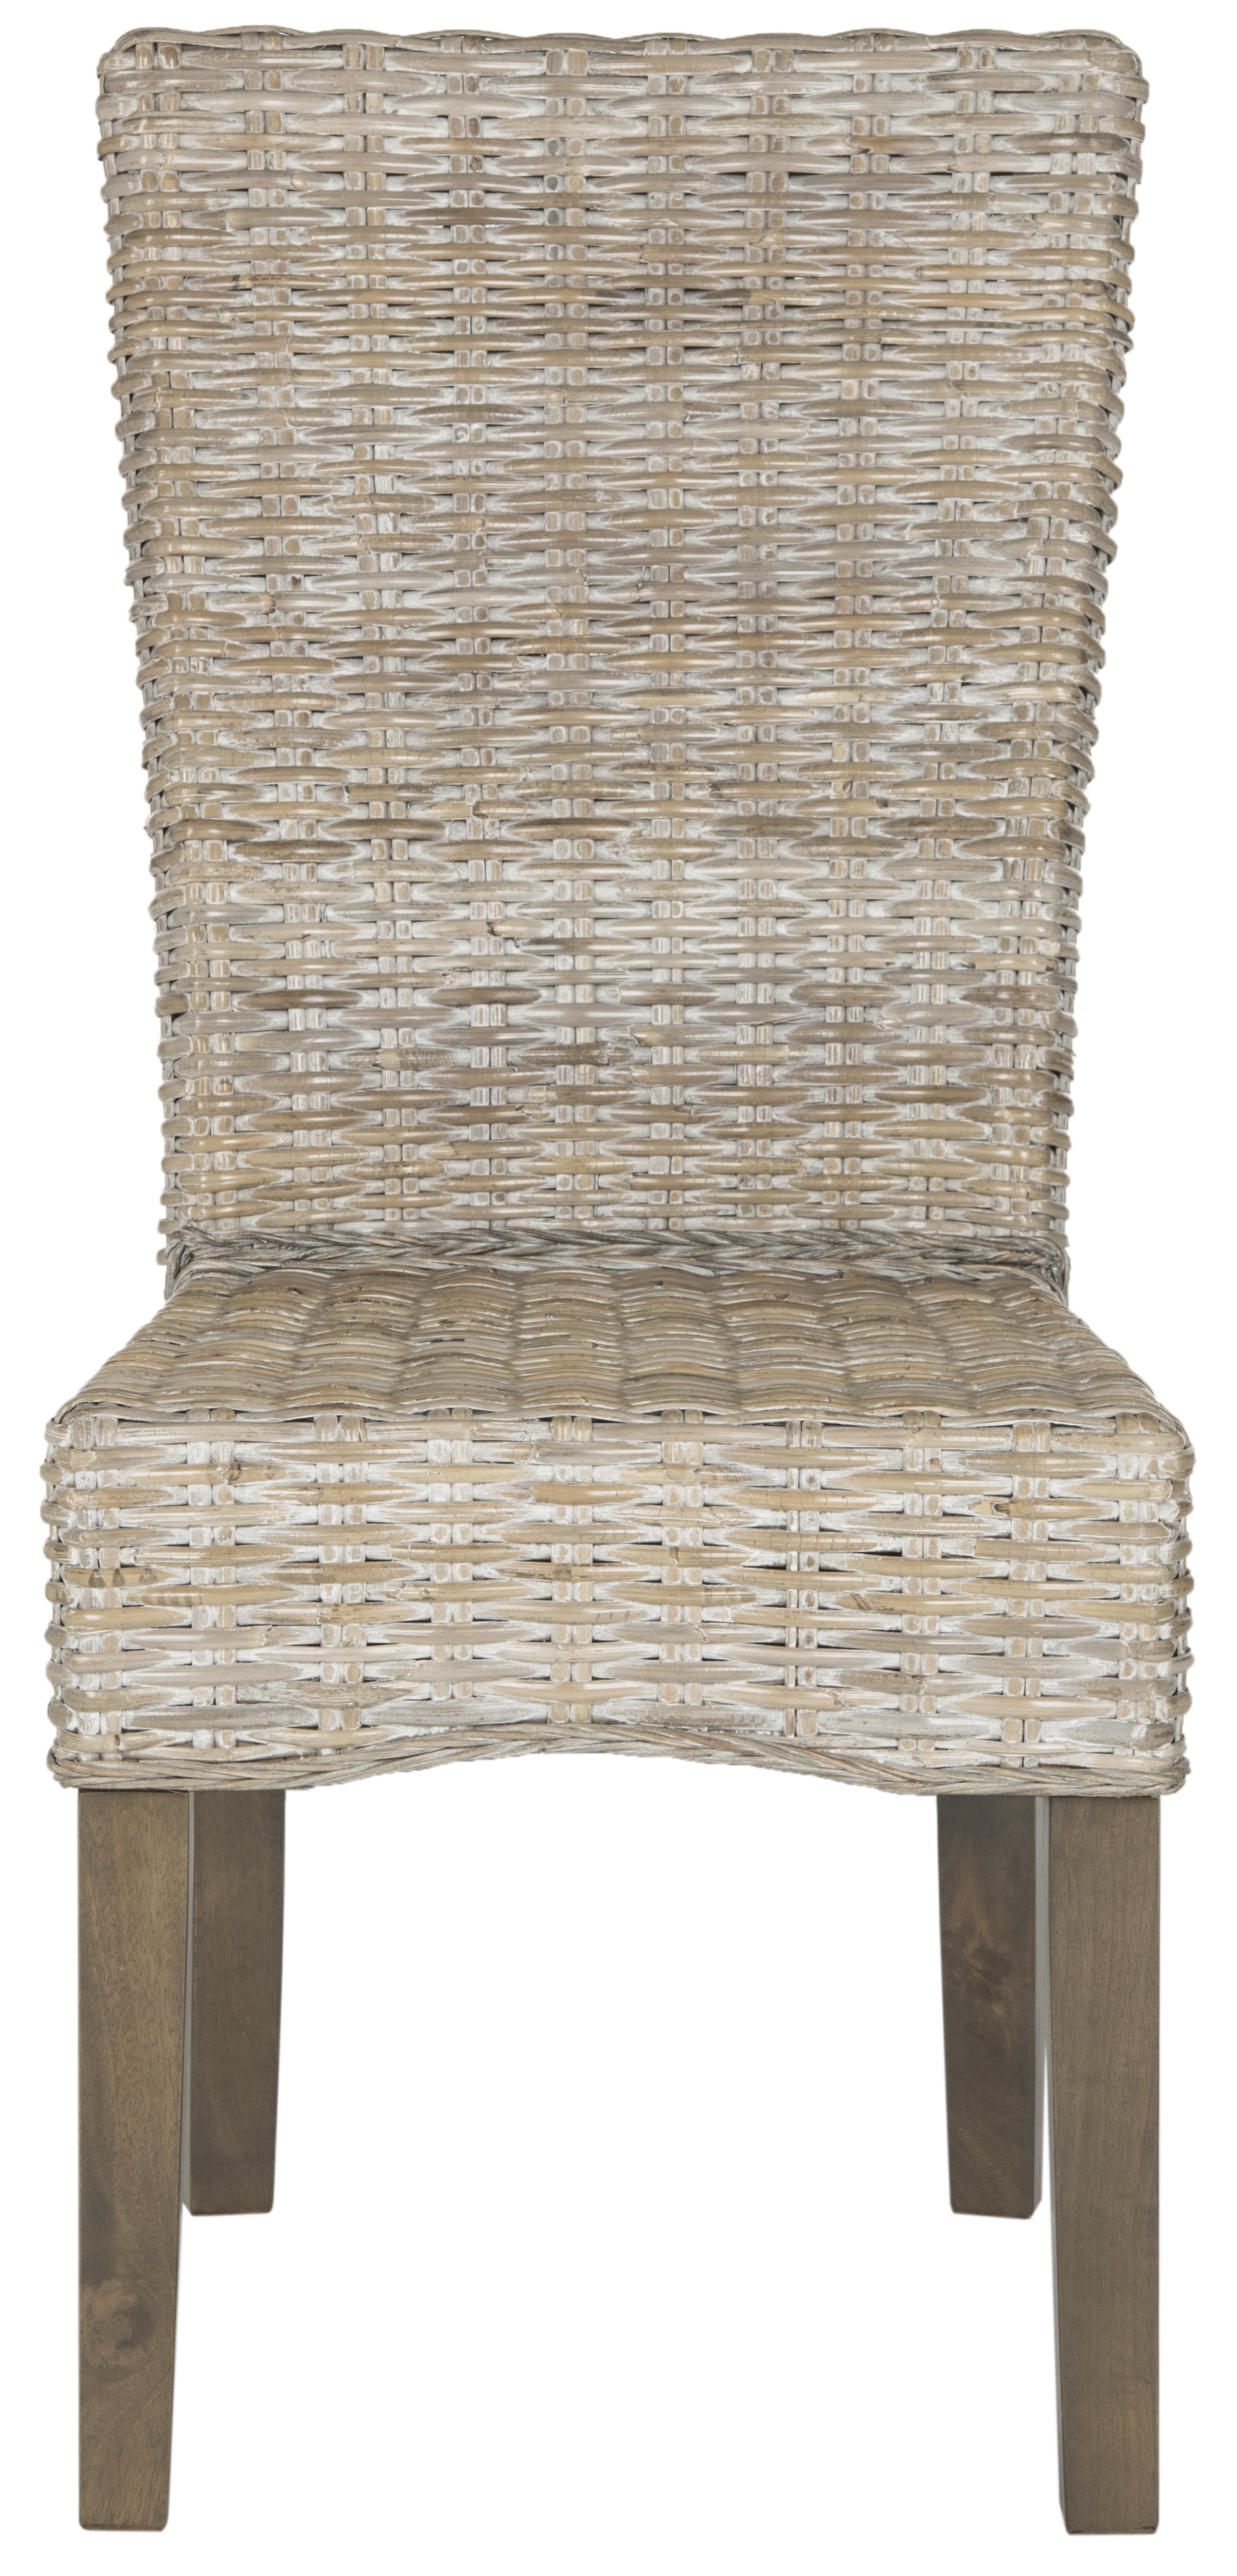 Ozias 19''H Wicker Dining Chair - White Wash - Arlo Home - Image 2